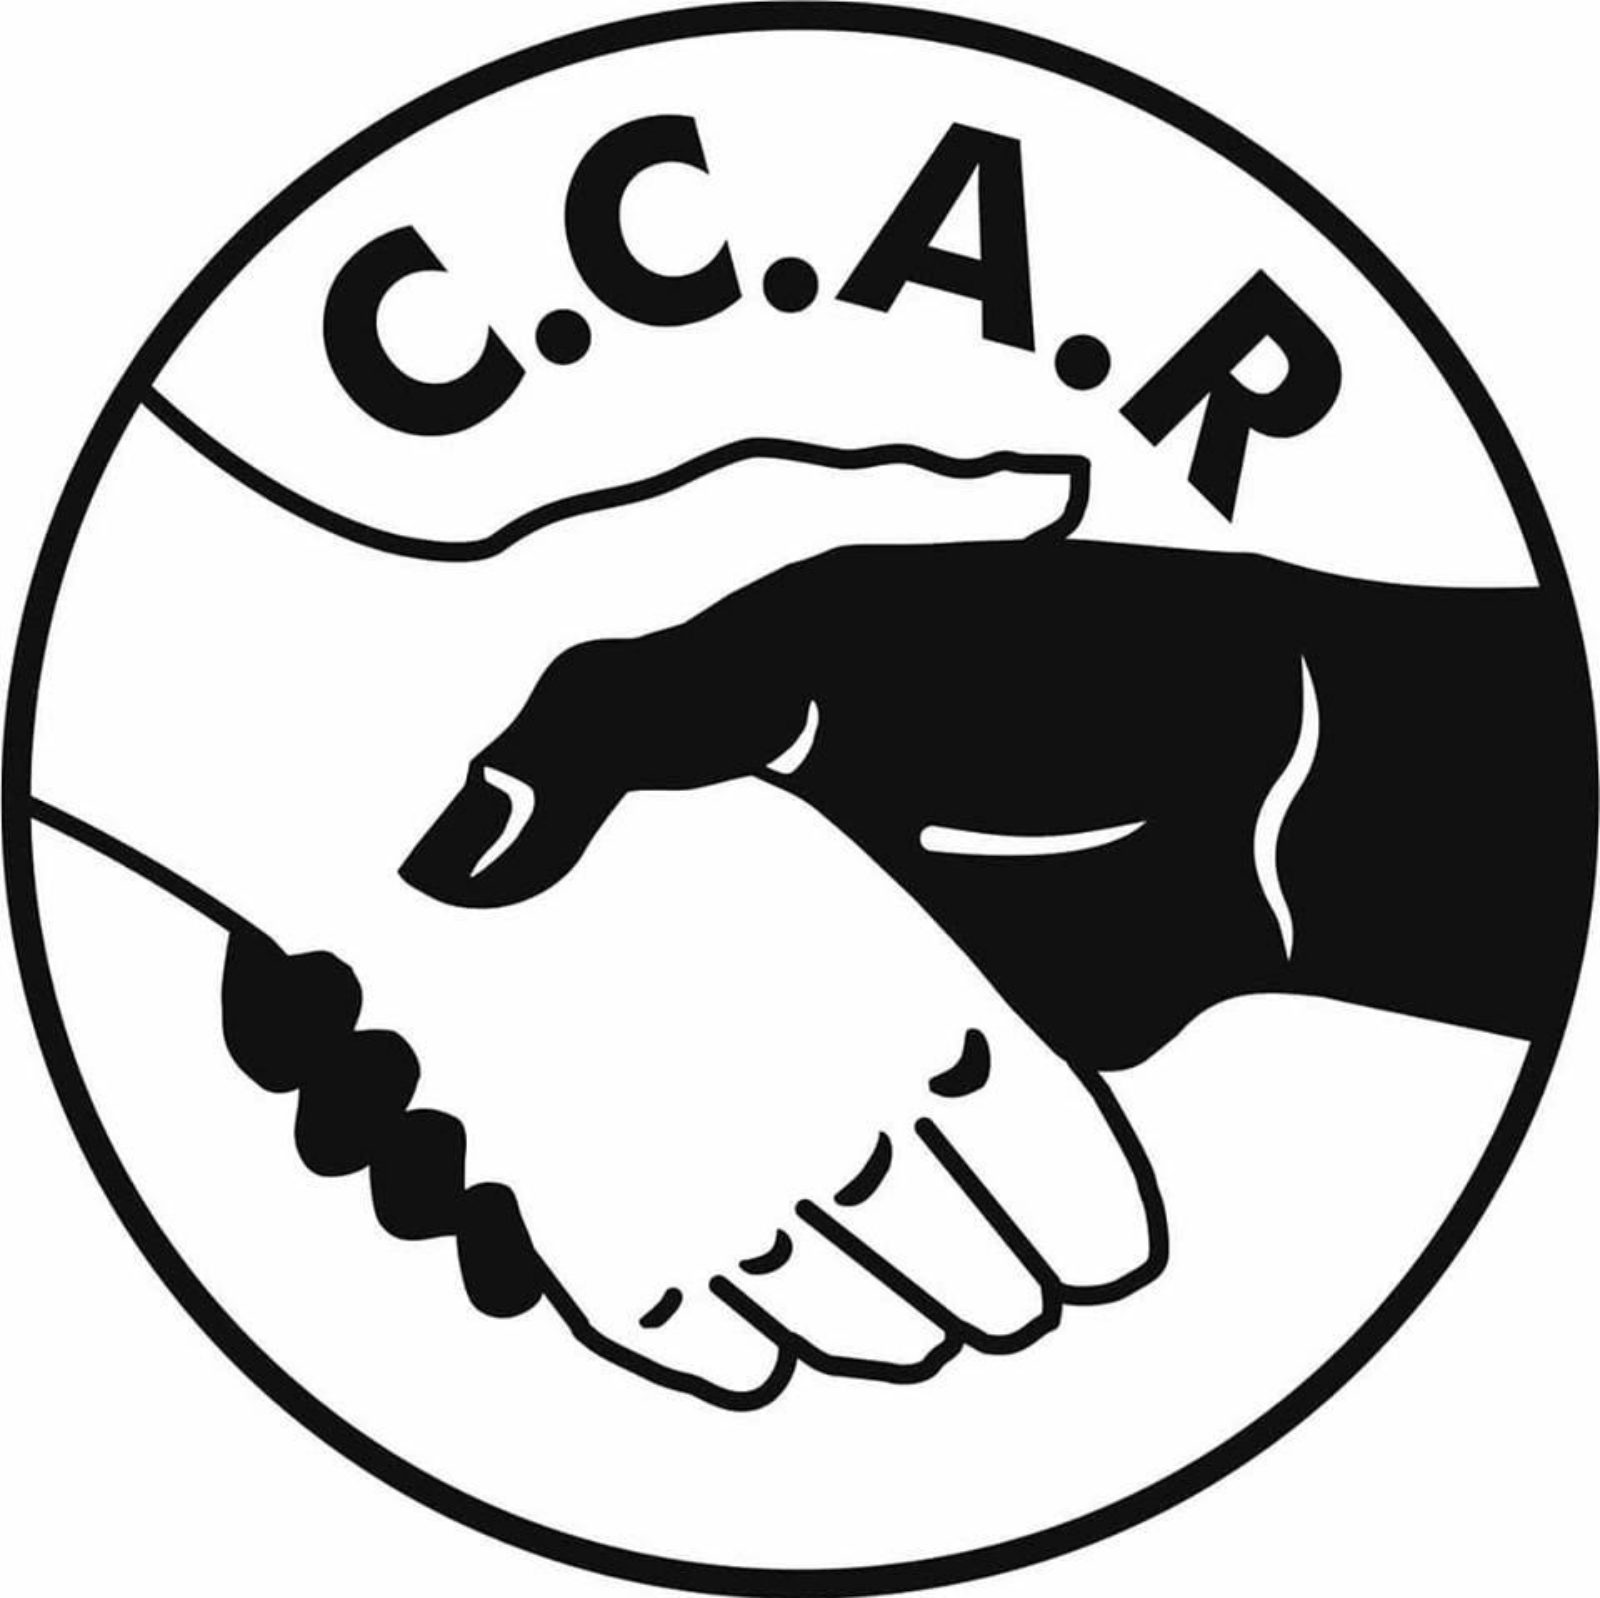 CCAR News